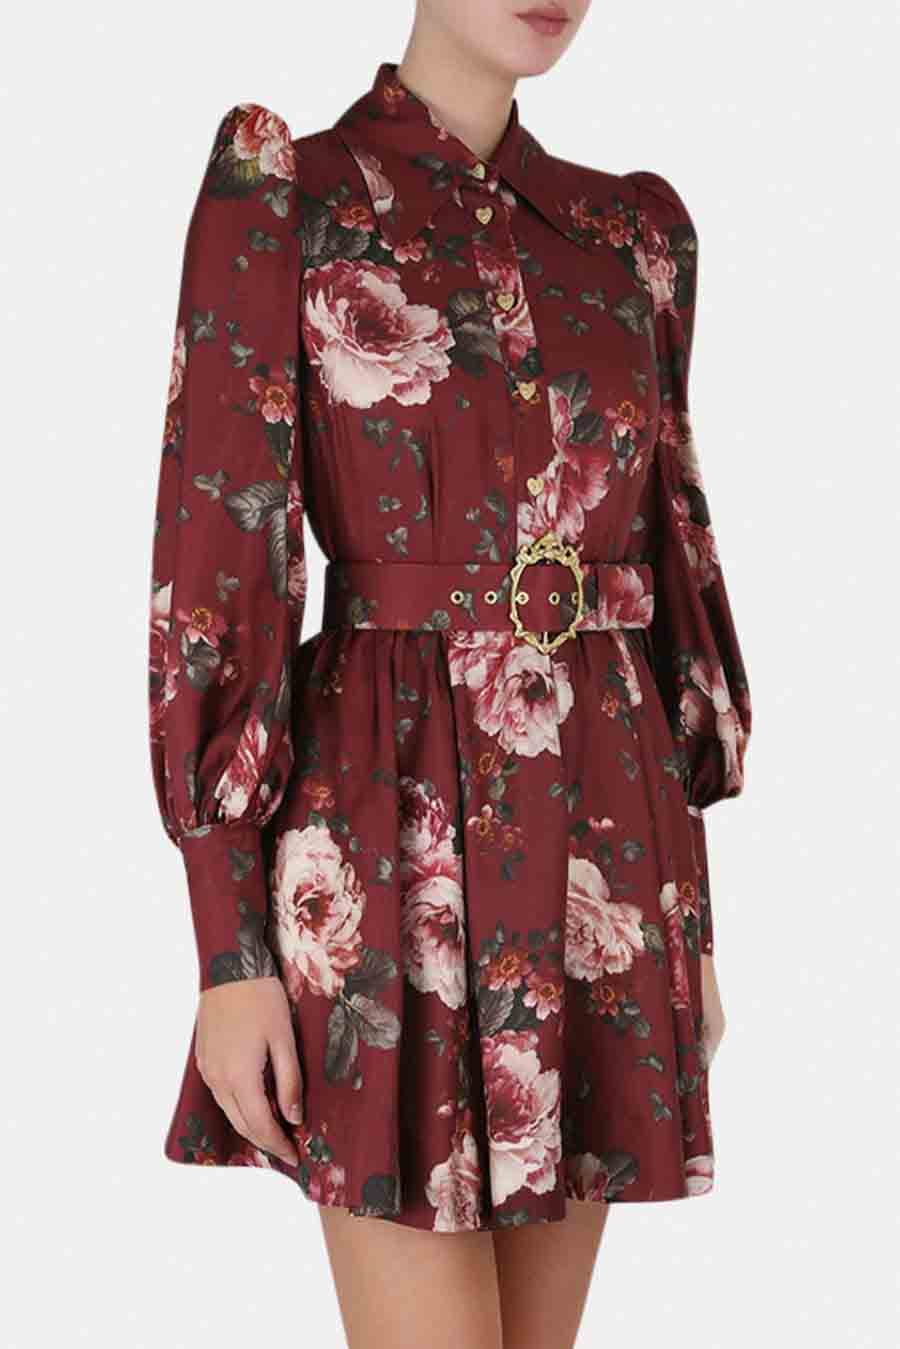 Luminosity Shirt Dress Burgundy Floral Print